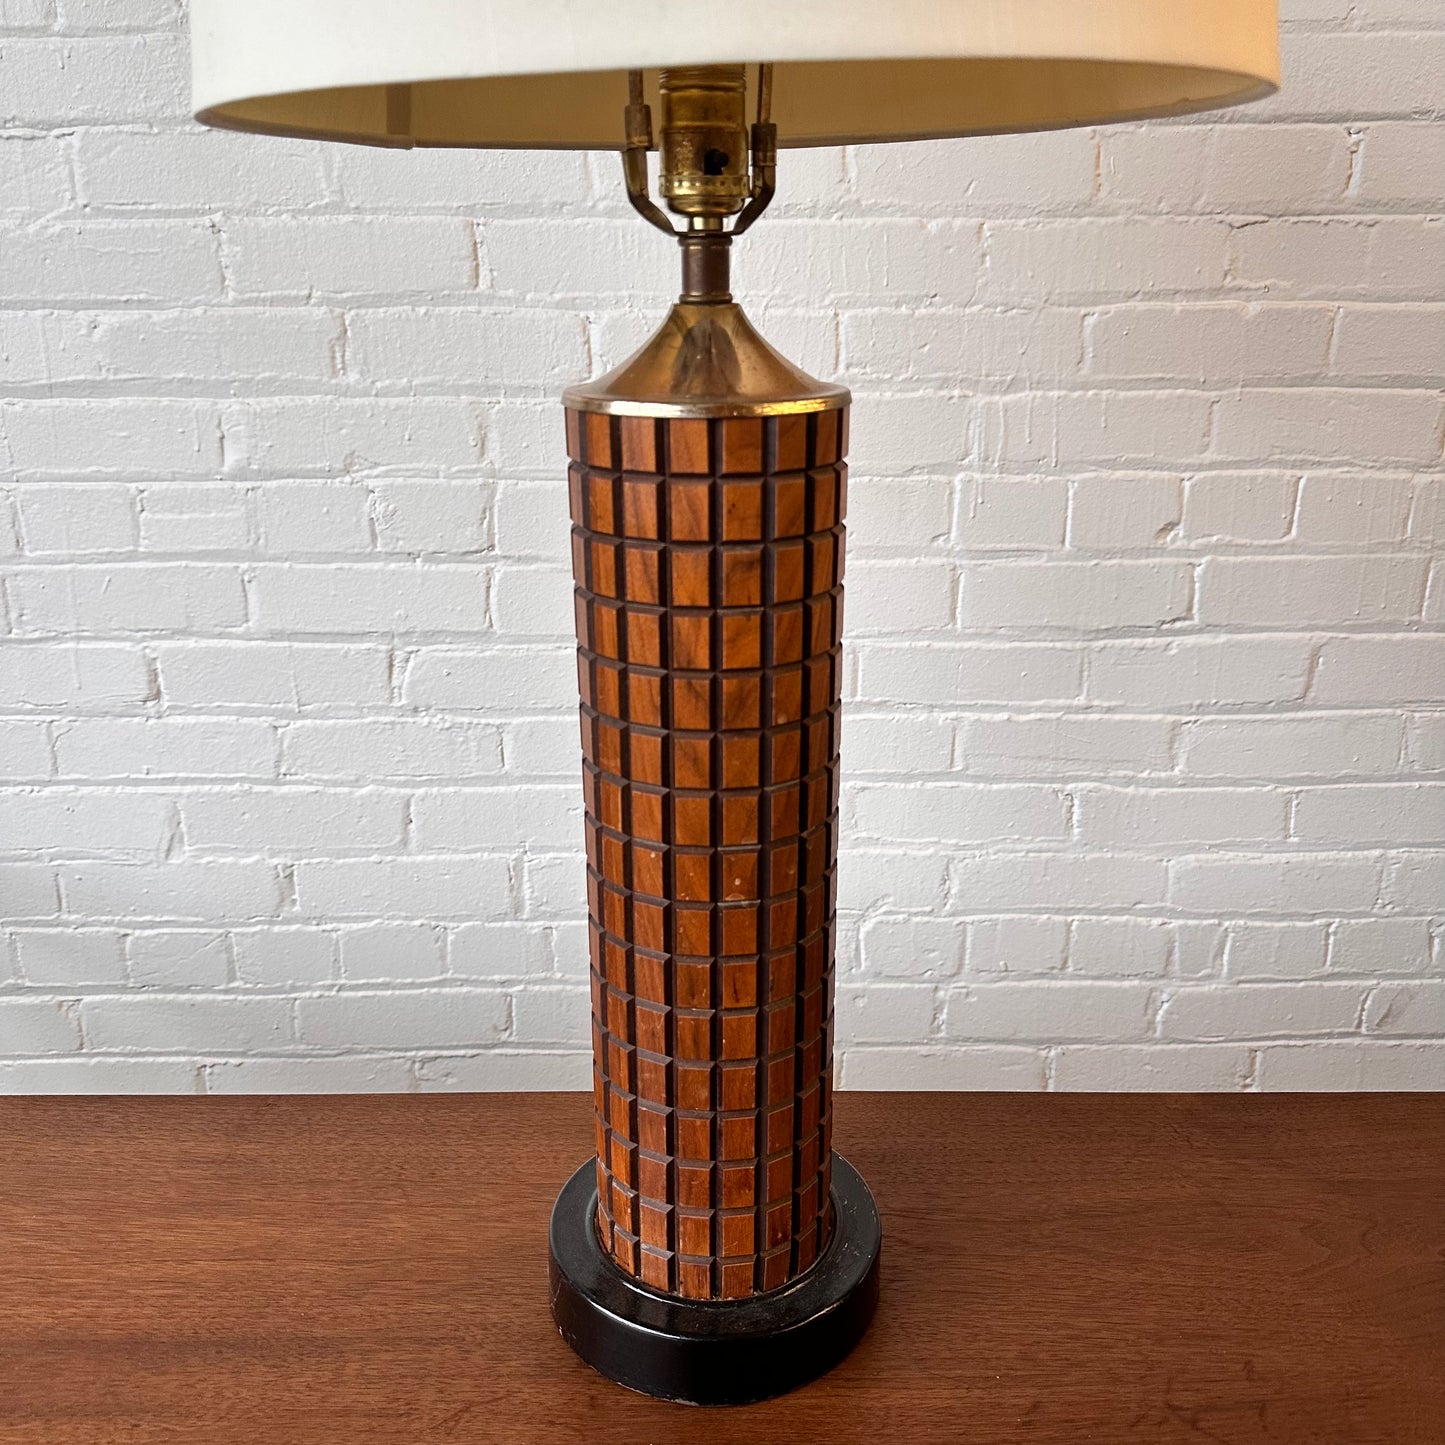 1964 WORLD'S FAIR WALNUT & BRASS TABLE LAMP